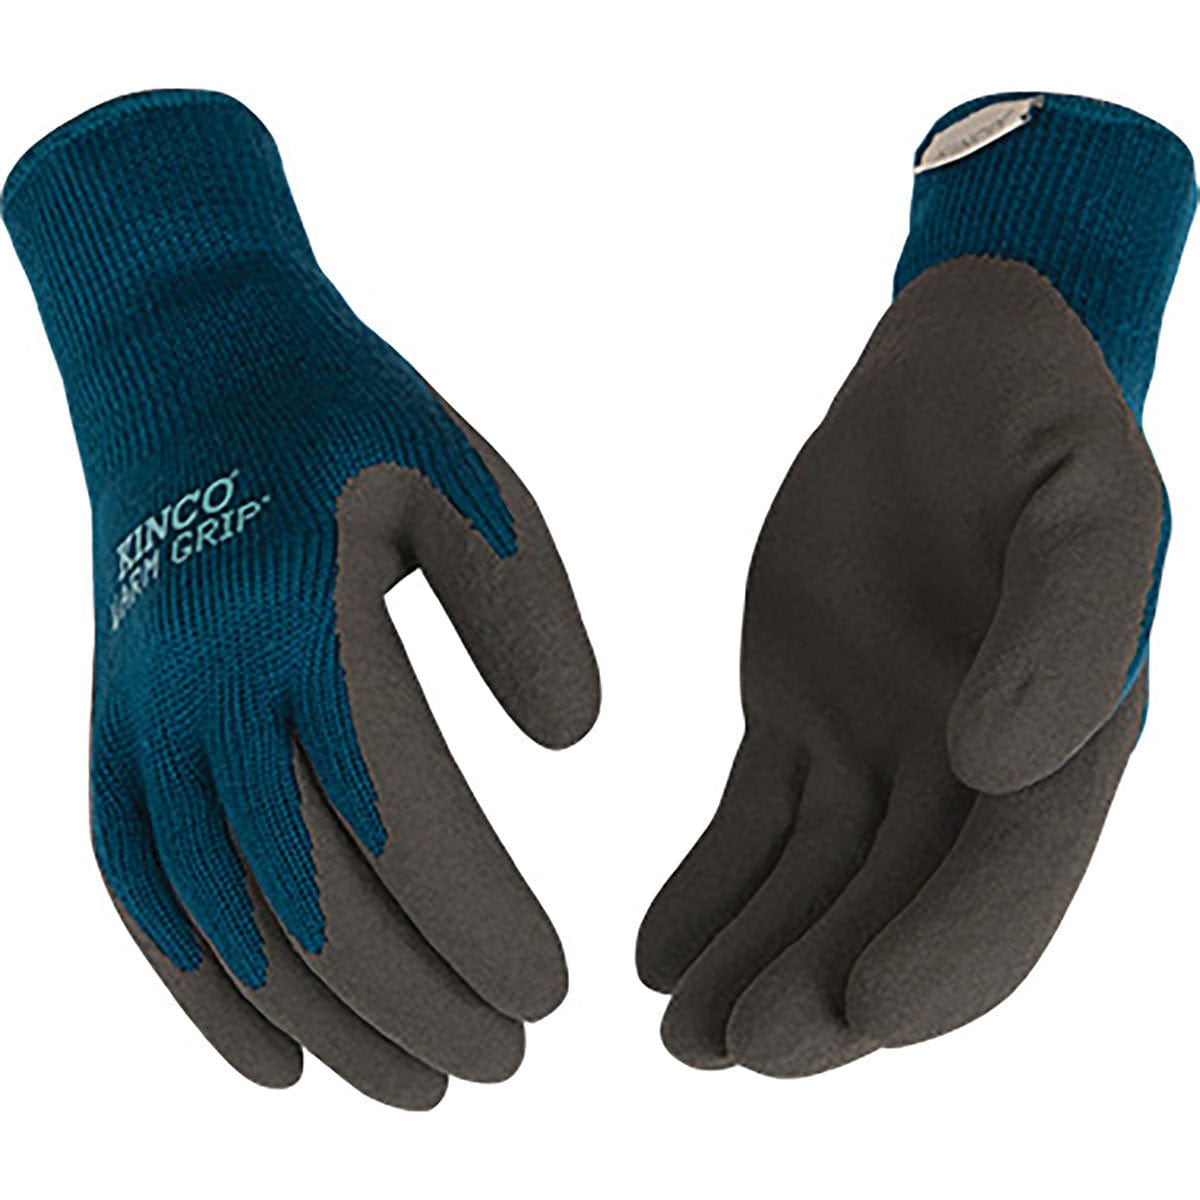 Rubber Palm Coated Stretch Knit Work Gloves | Nebraska Turf Products